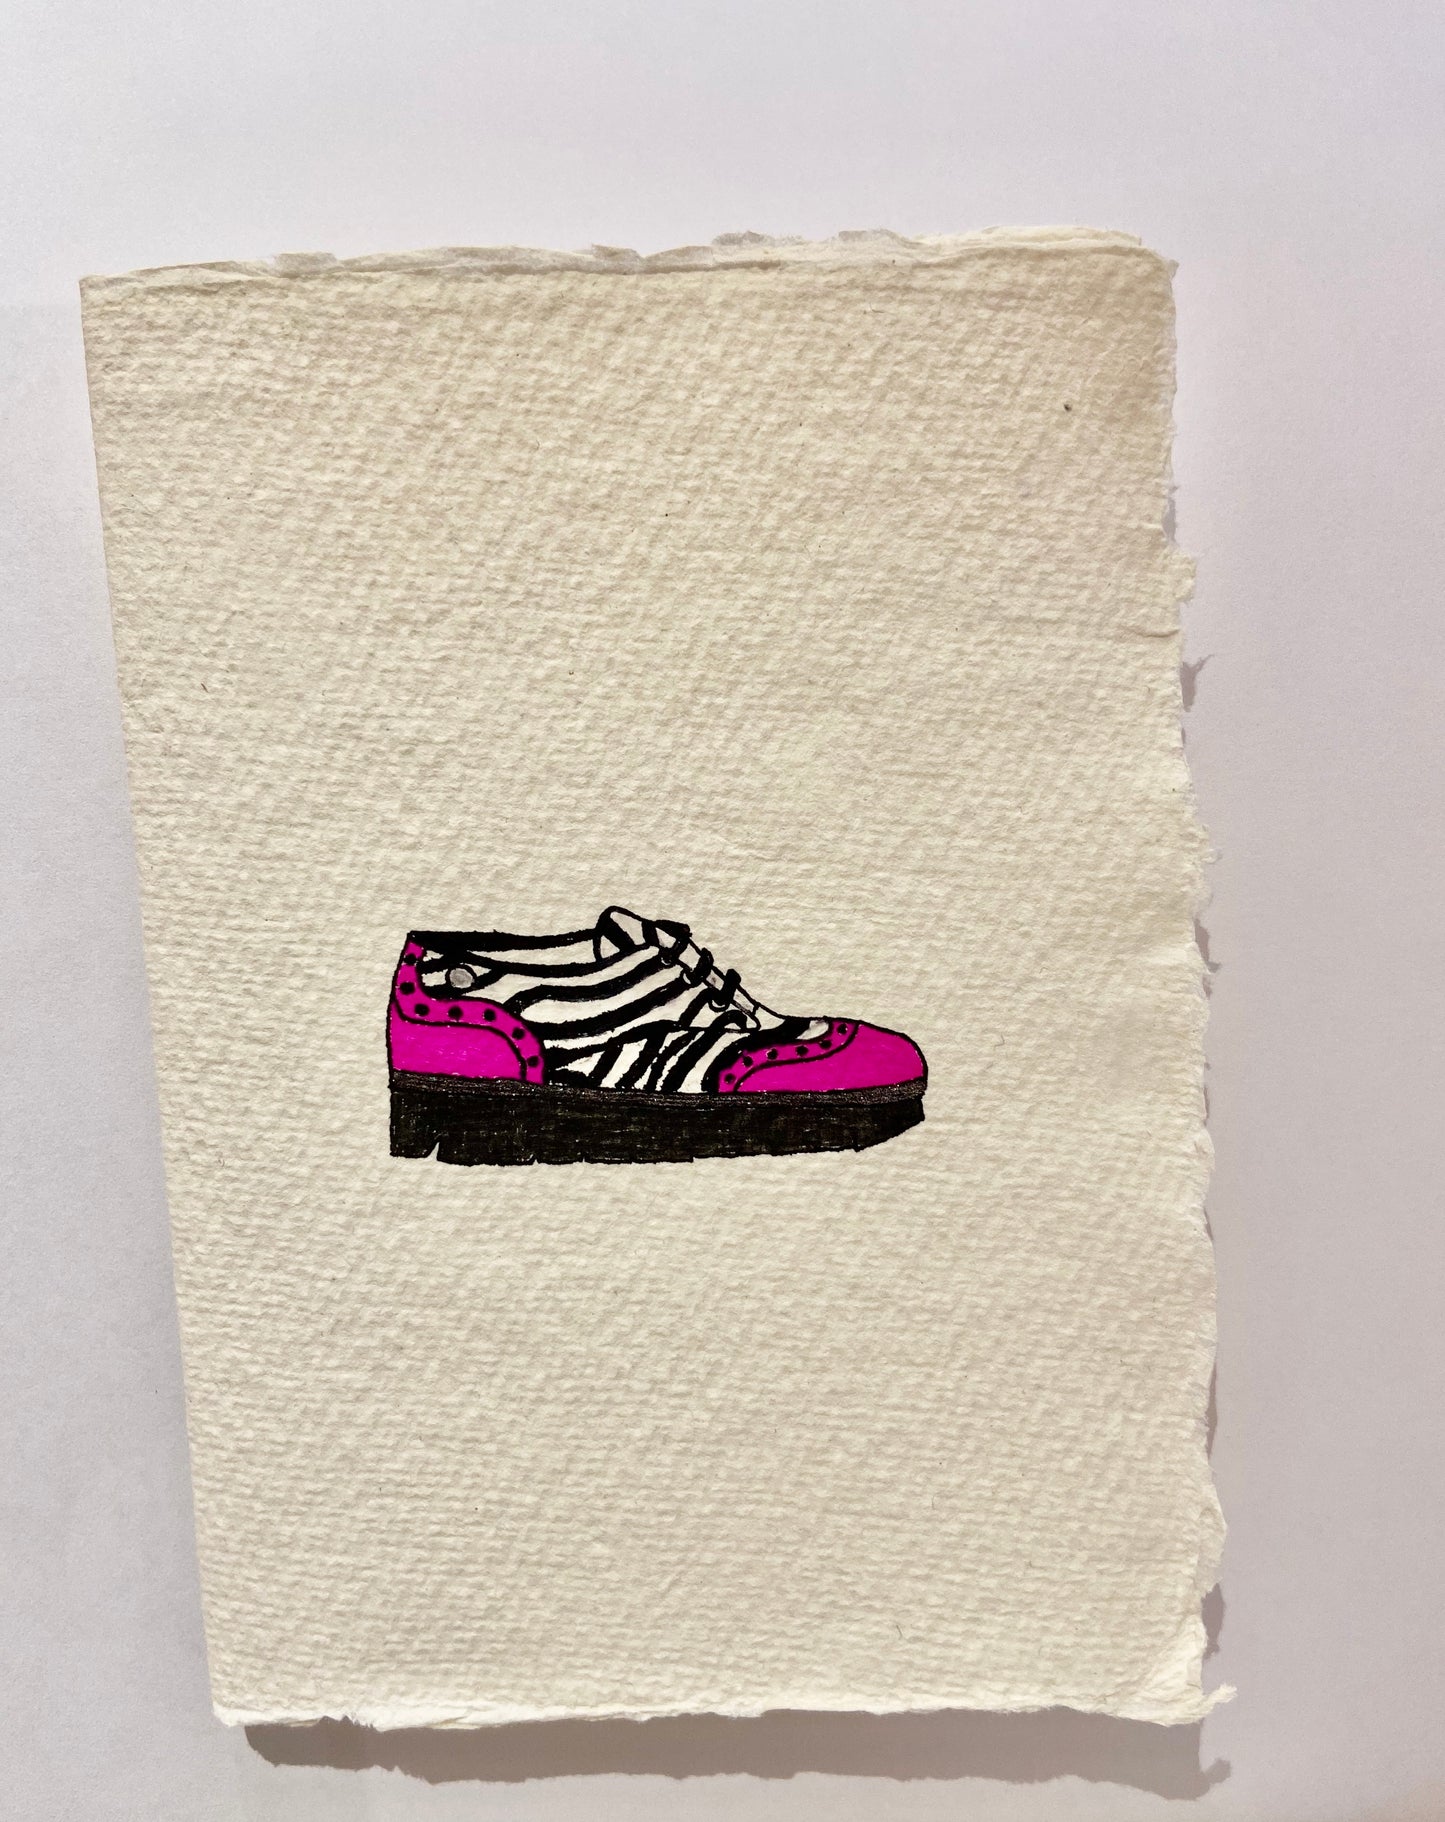 CARD - Bolt Zebra